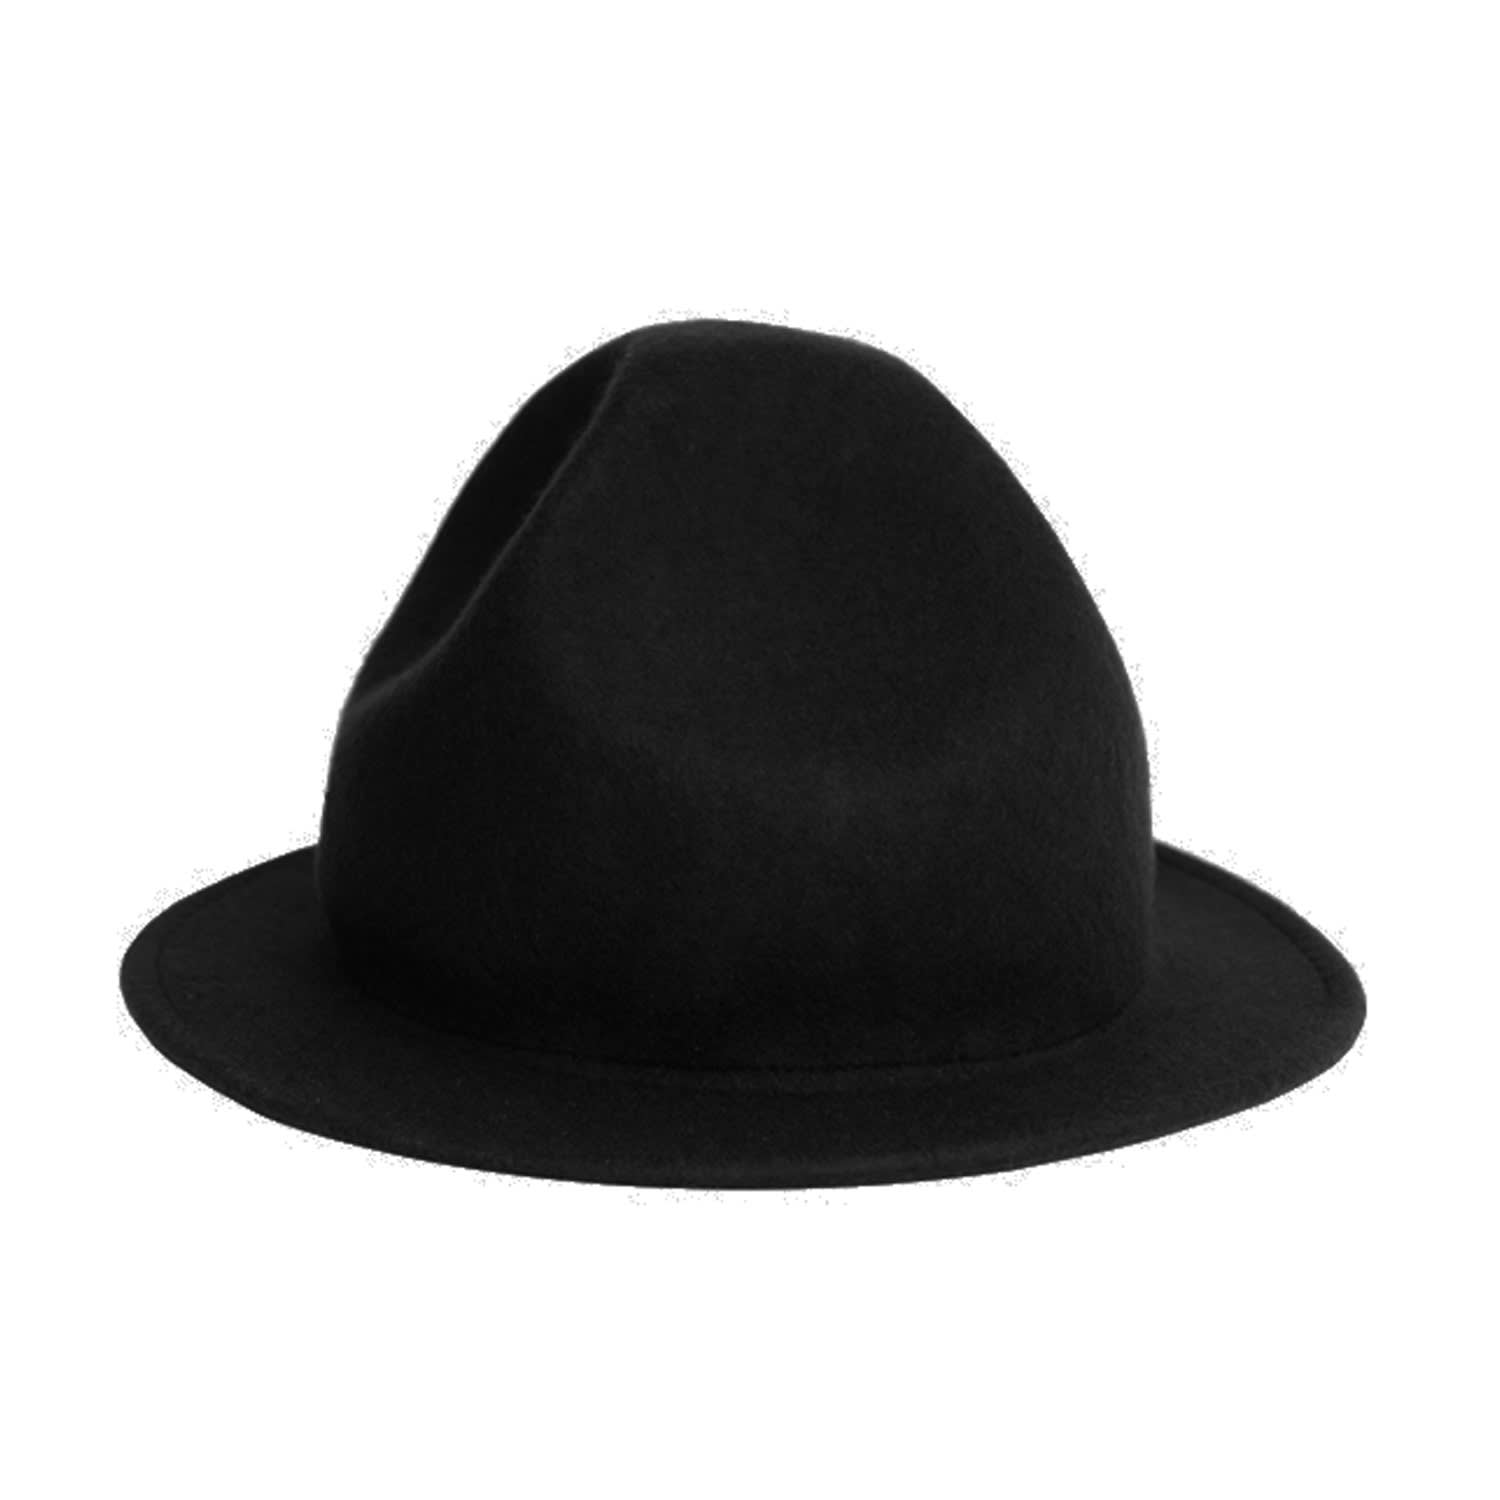 Black Men's Stylish Felt Hat | Small | Justine Hats